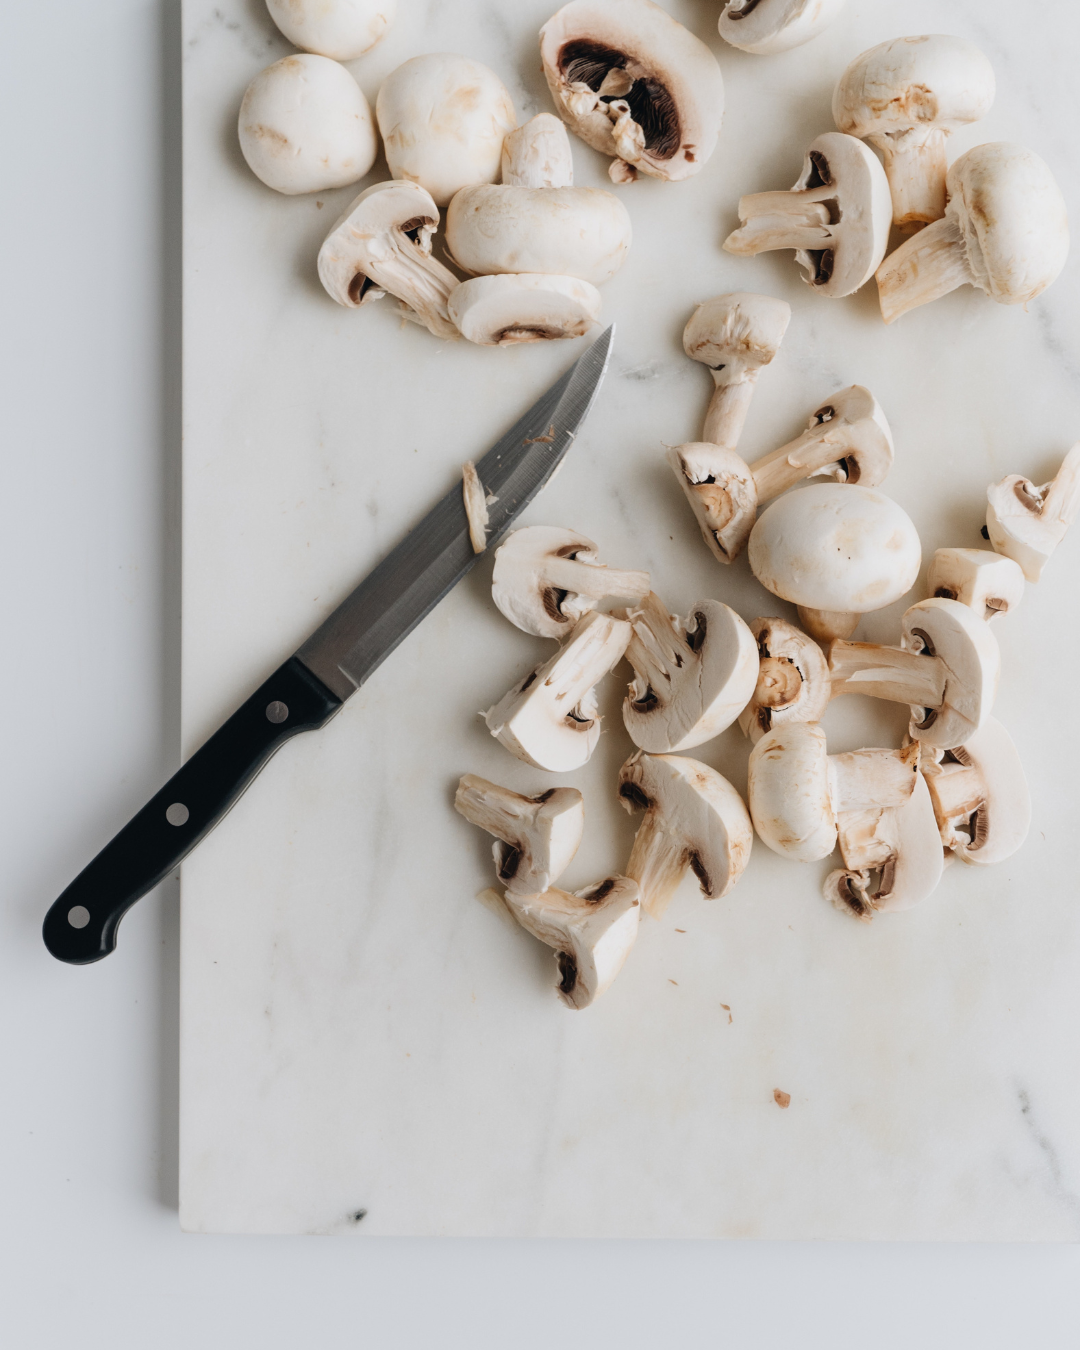 mushroom soup ingredients - mushrooms on cutting board.png